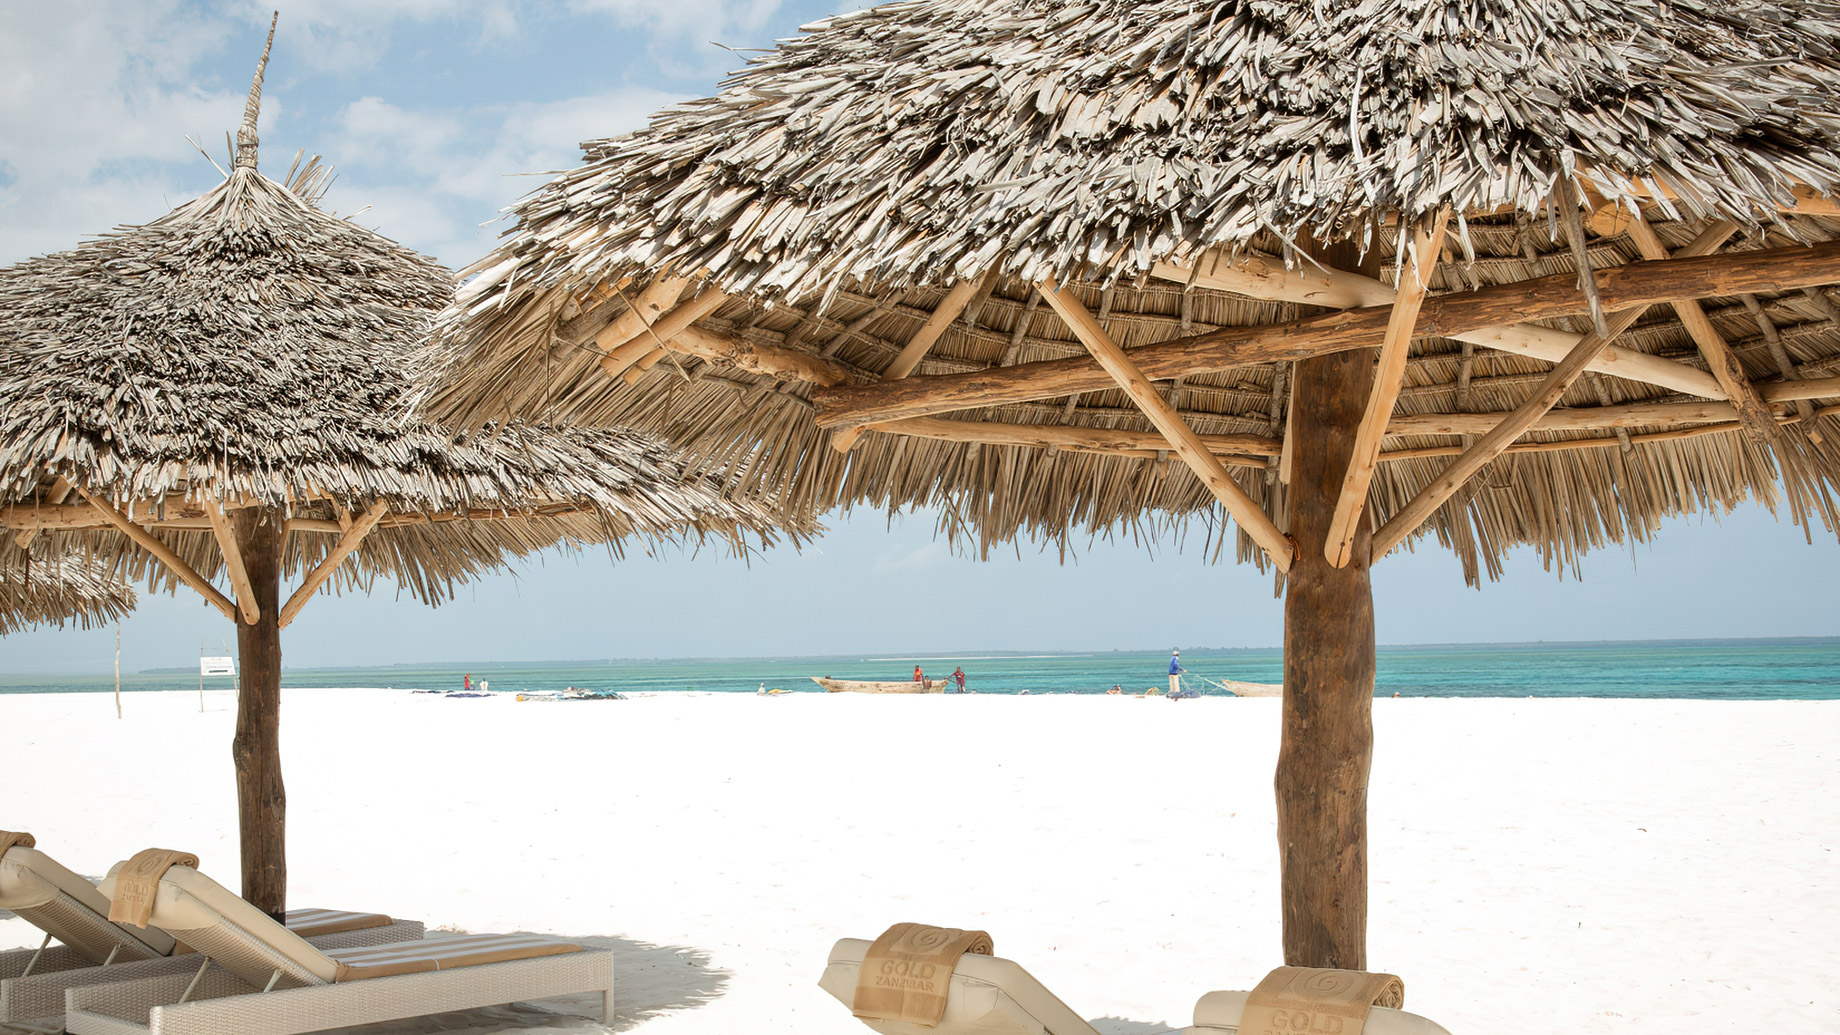 Gold Zanzibar Beach House & Spa Resort – Nungwi, Zanzibar, Tanzania – Beach Lounge Chairs and Umbrellas